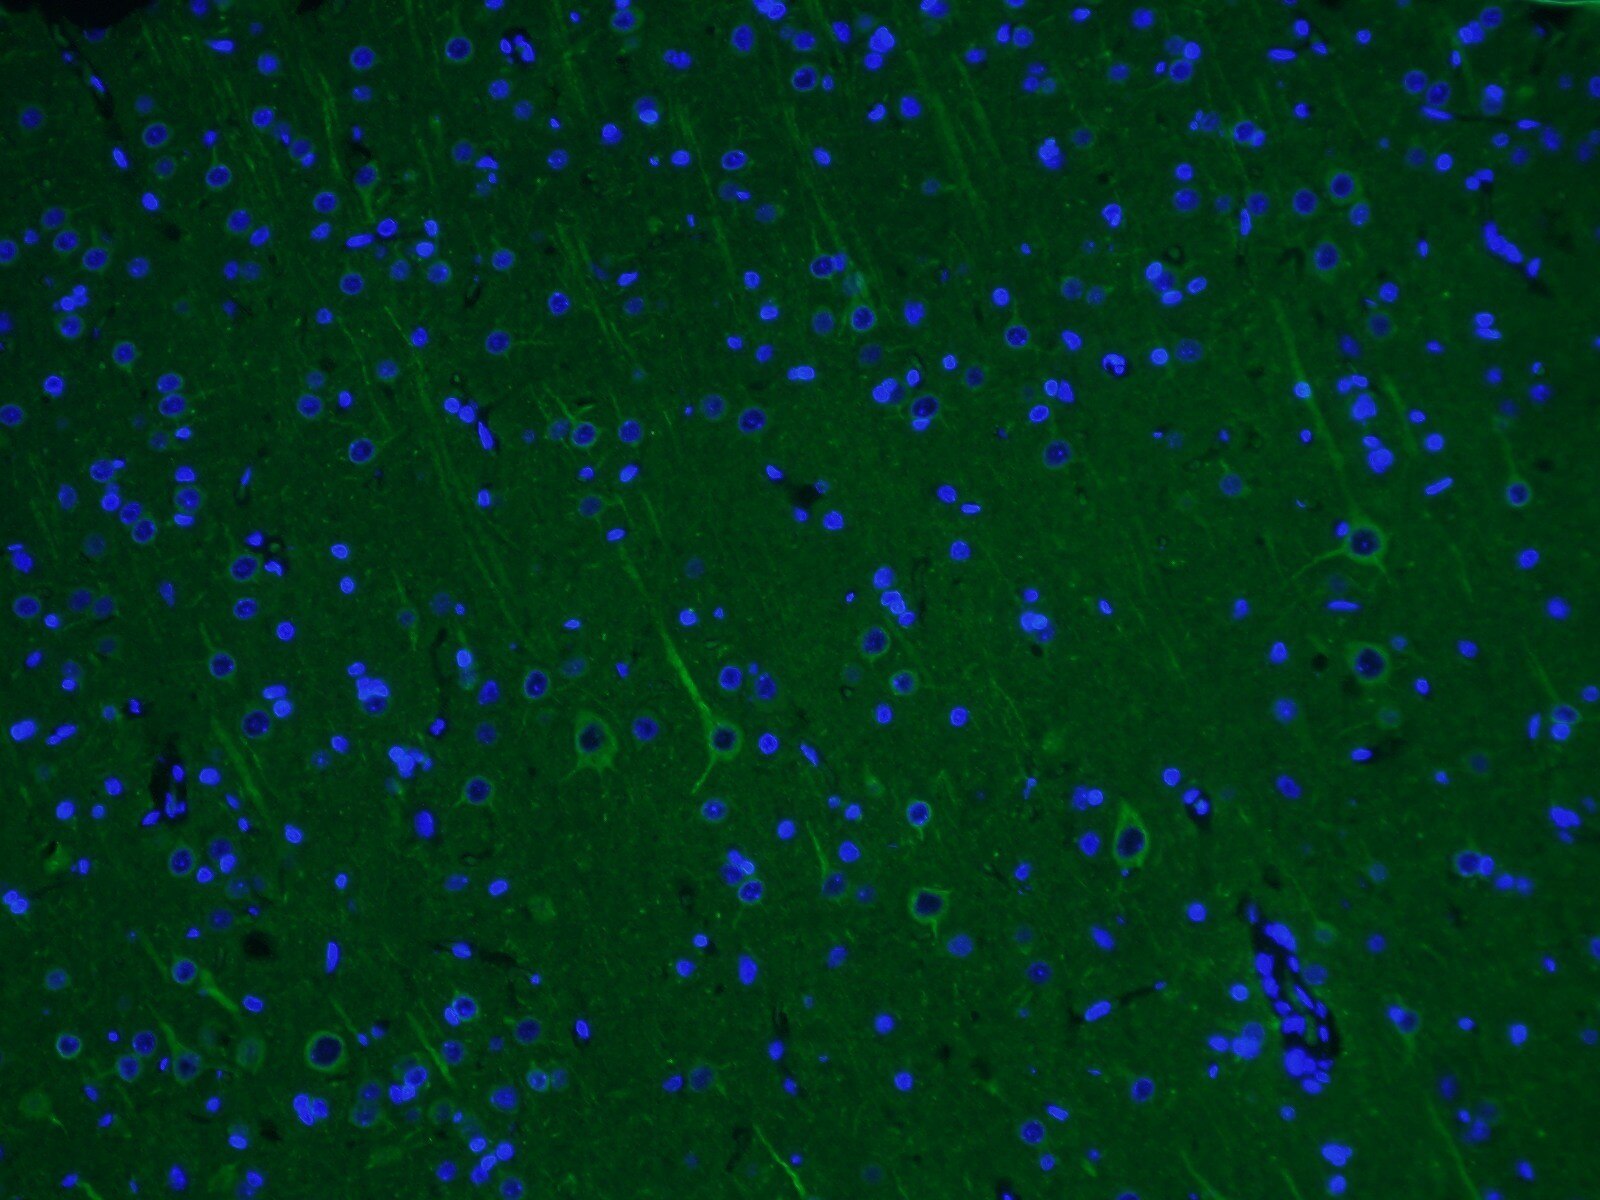 Alpha Tubulin Antibody IF rat brain tissue 66031-1-Ig